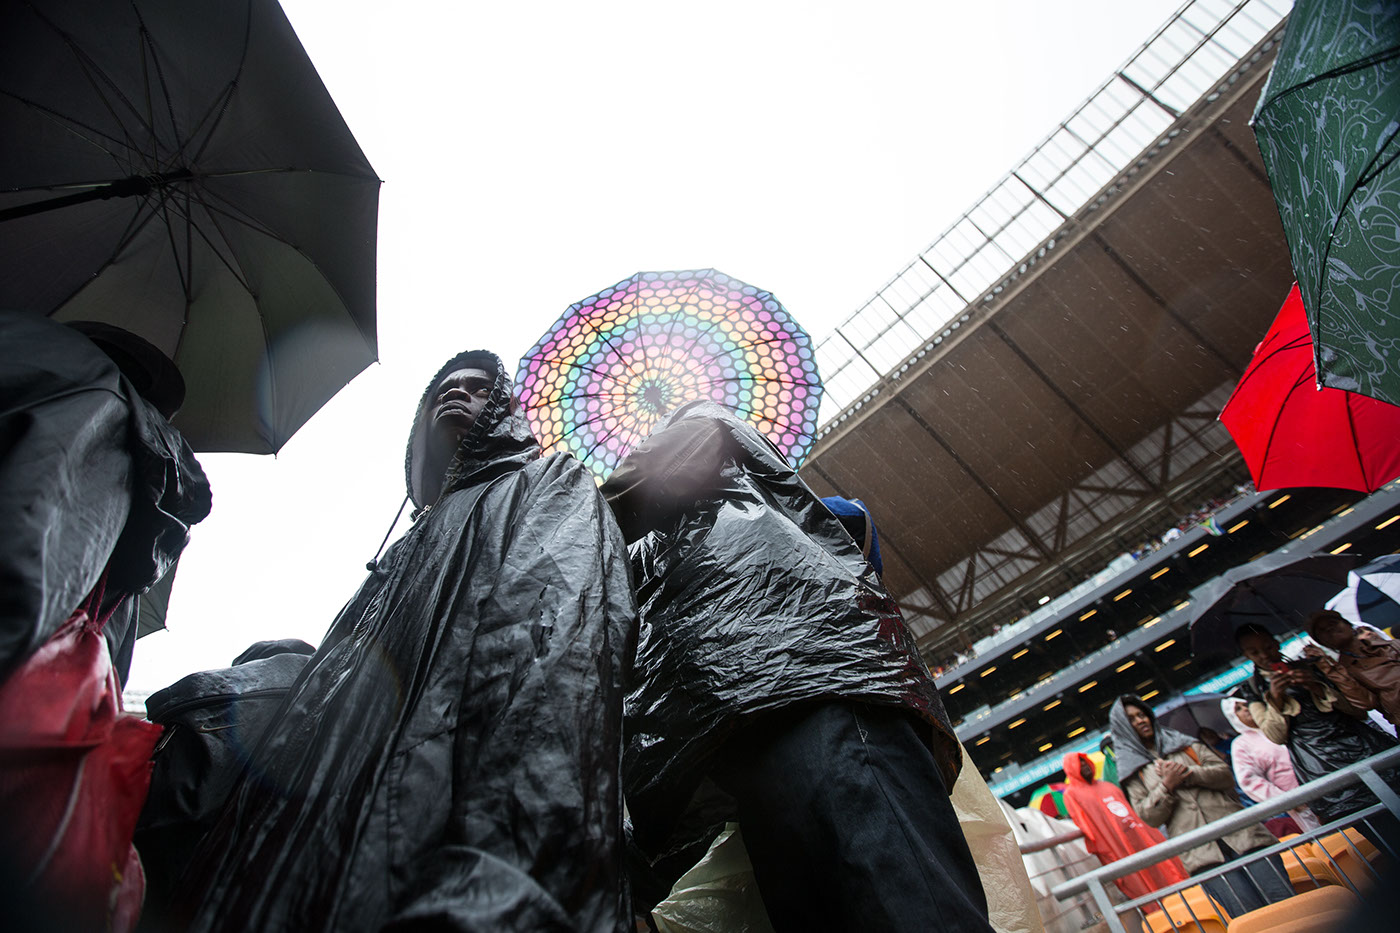 Nelson Mandela Mandela madiba tata south africa FNB fnb stadium rain lowkey anc portraits